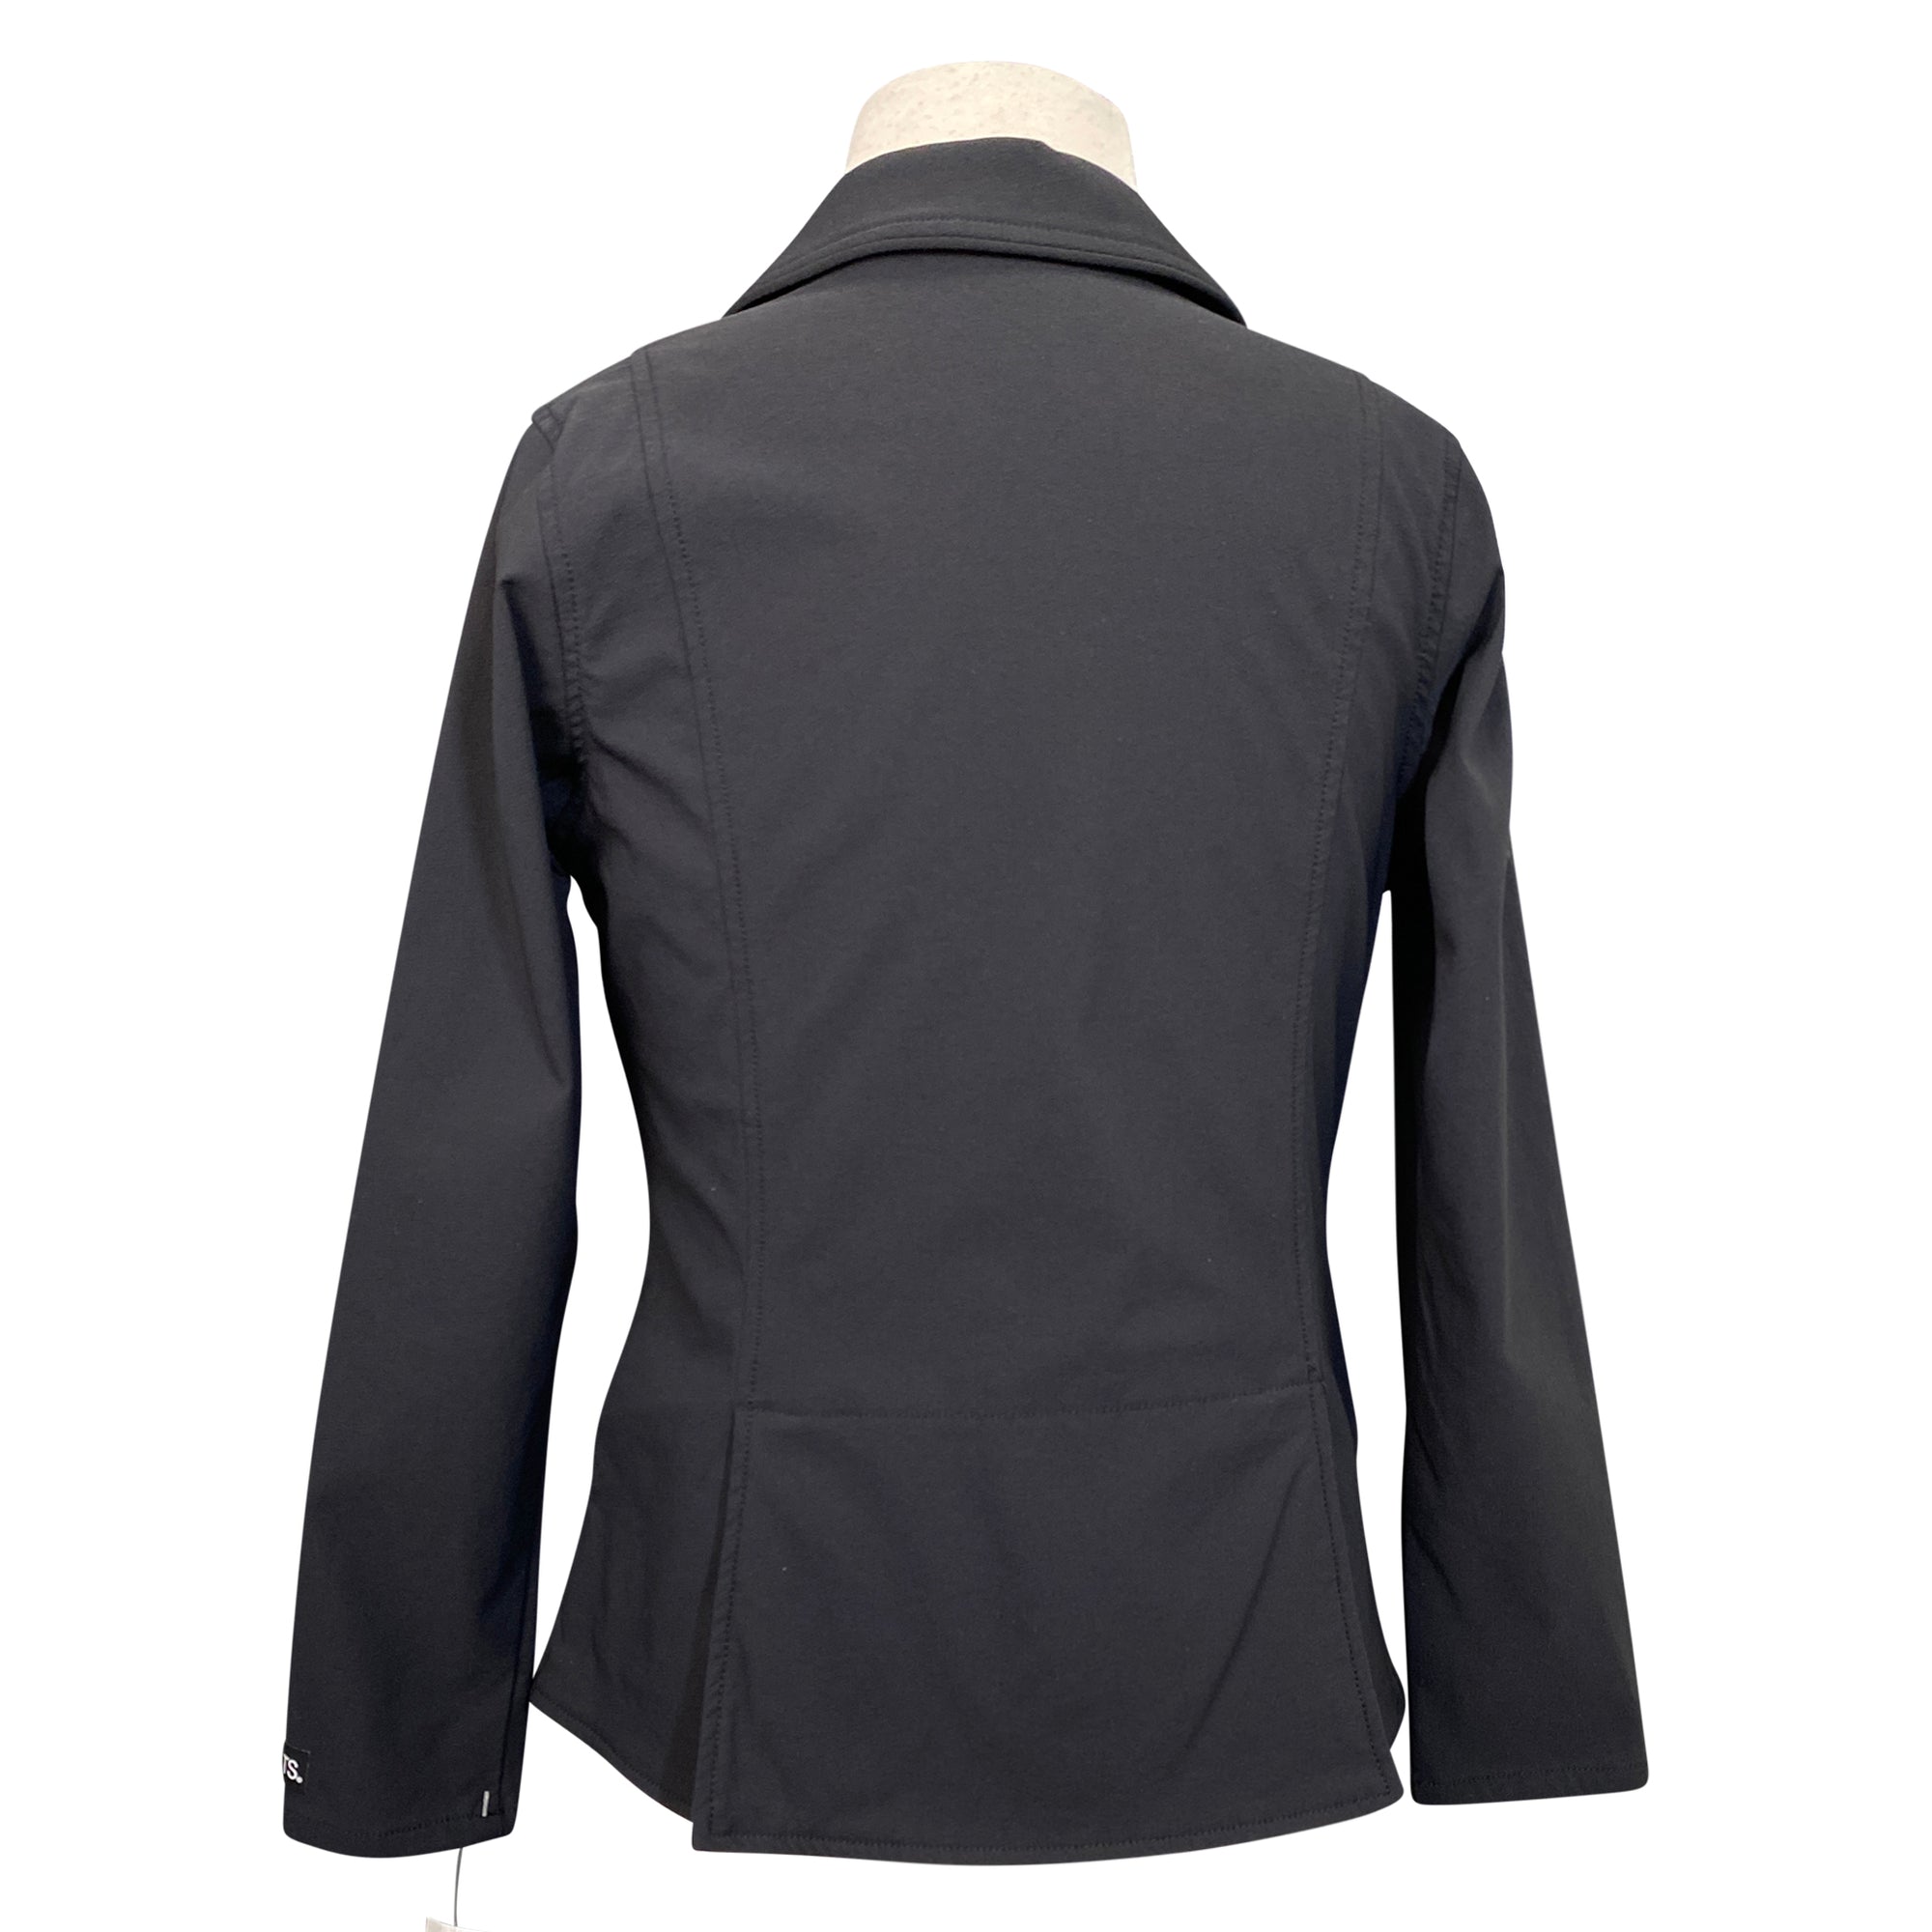 Kerrits 'Competitors Koat' Show Jacket in Black